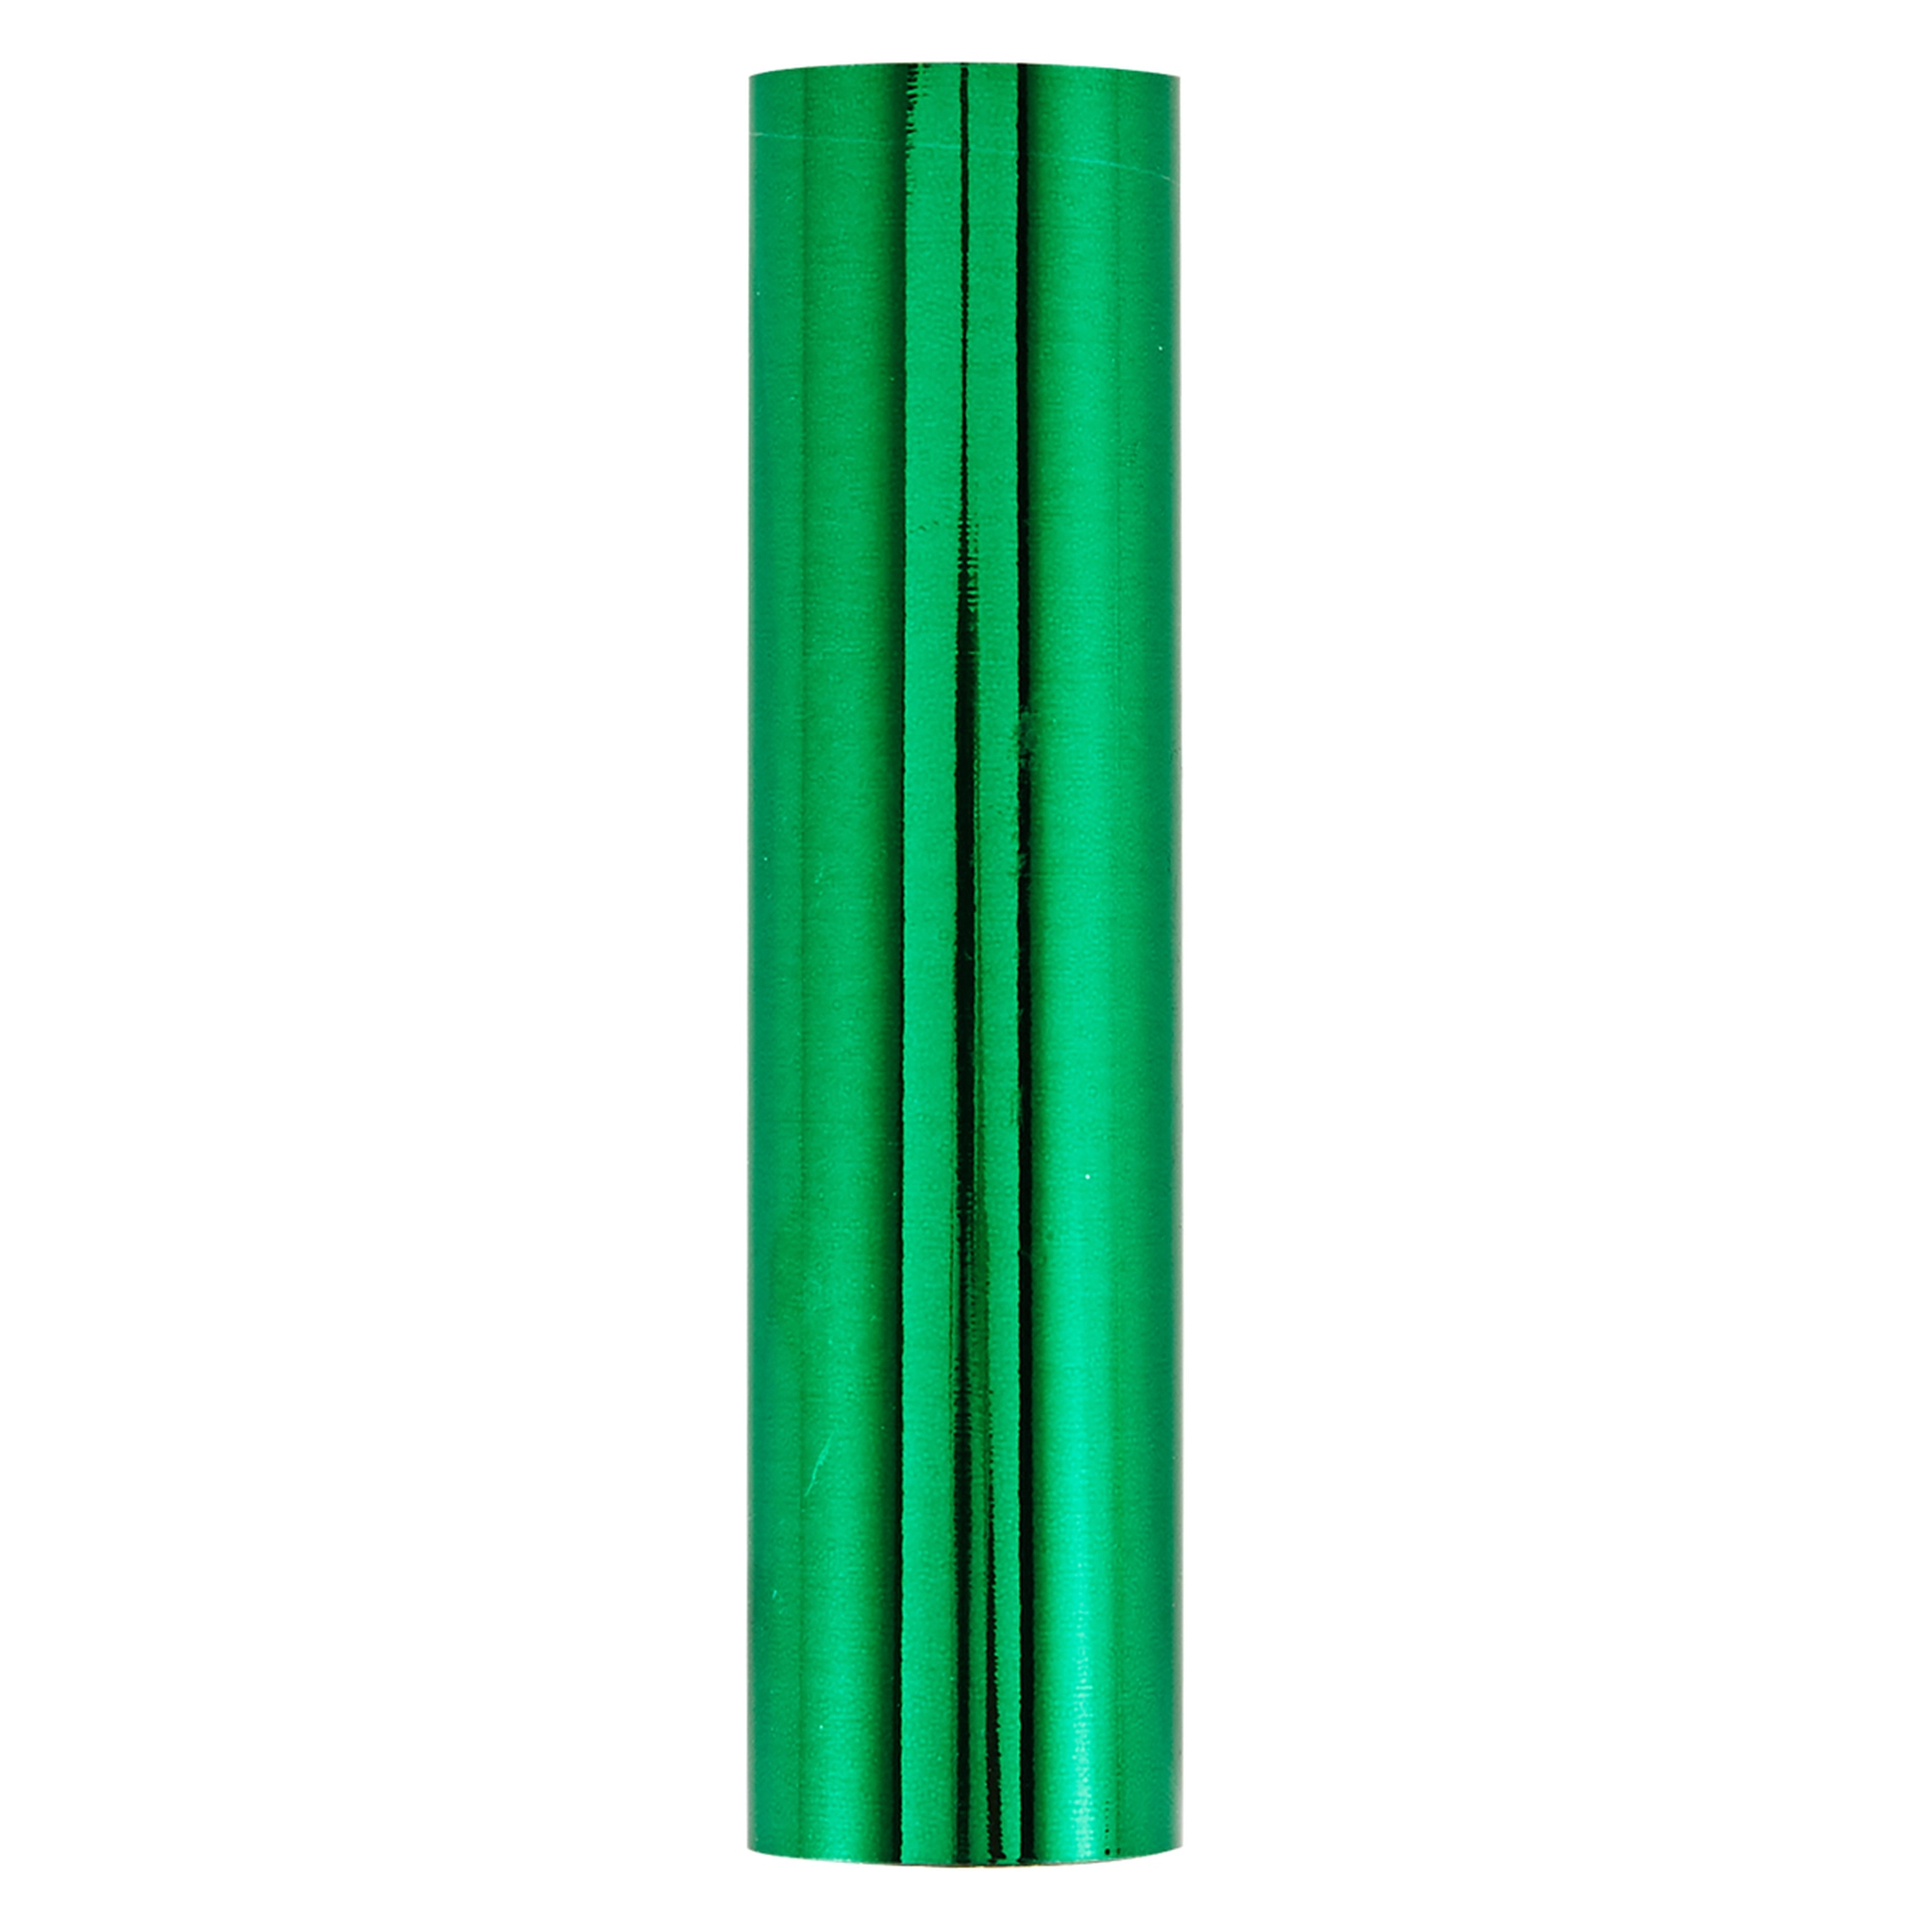 Bild 1 von Spellbinders Glimmer Hot Foil Roll - Viridian Green - Folie